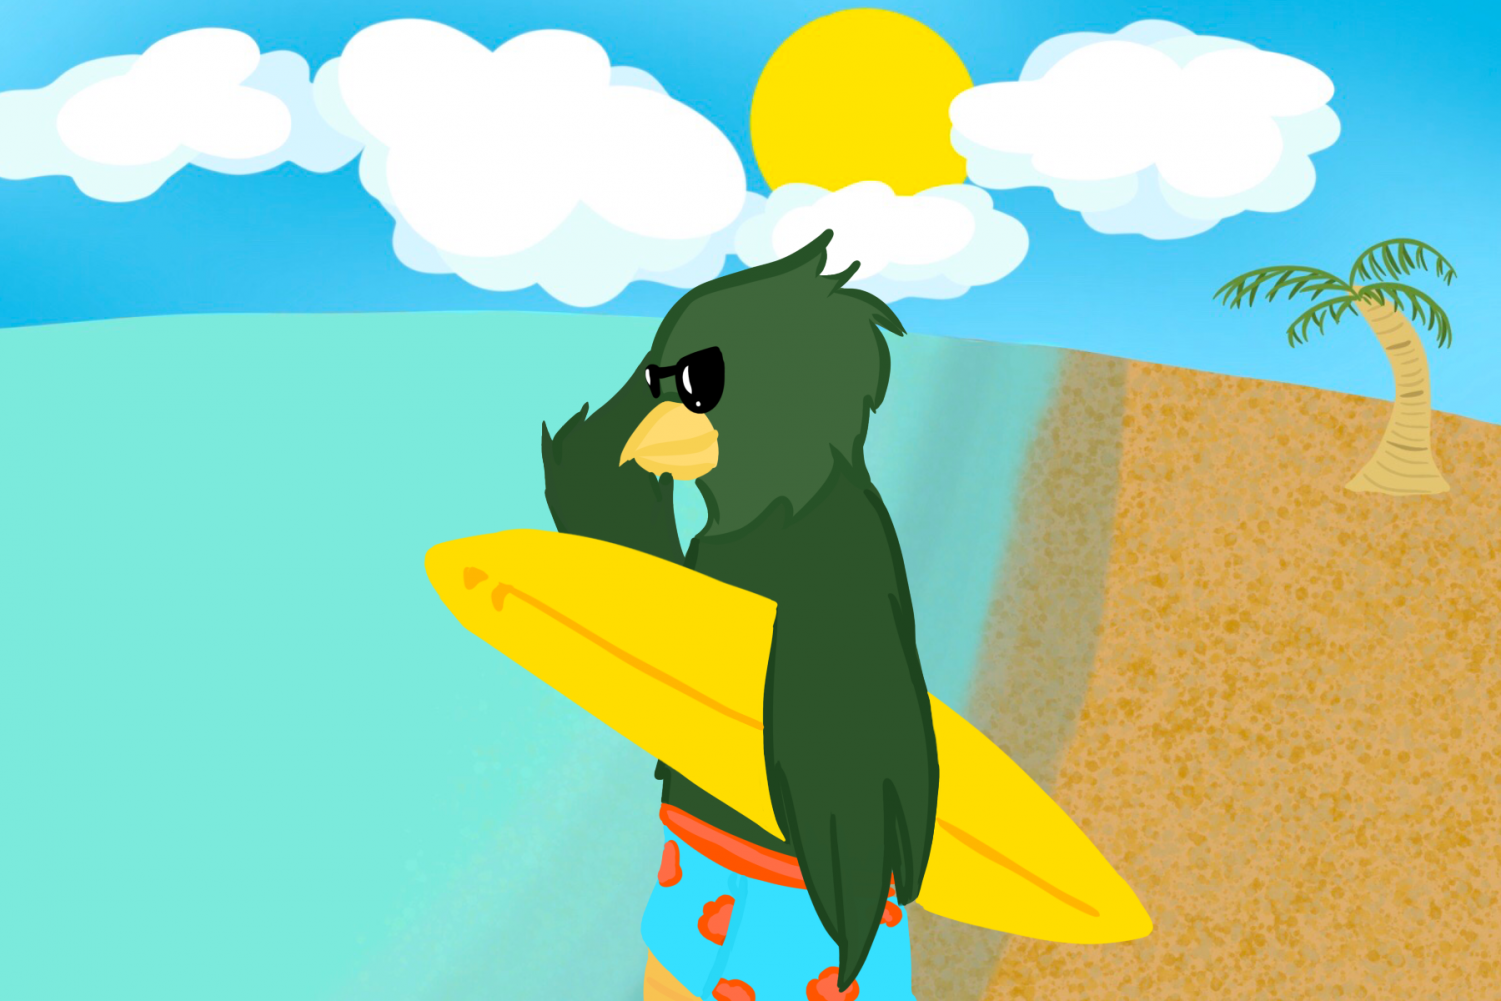 Freddy Falcon went surfing this summer. What did you do? Original artwork by Evanthia Stirou.